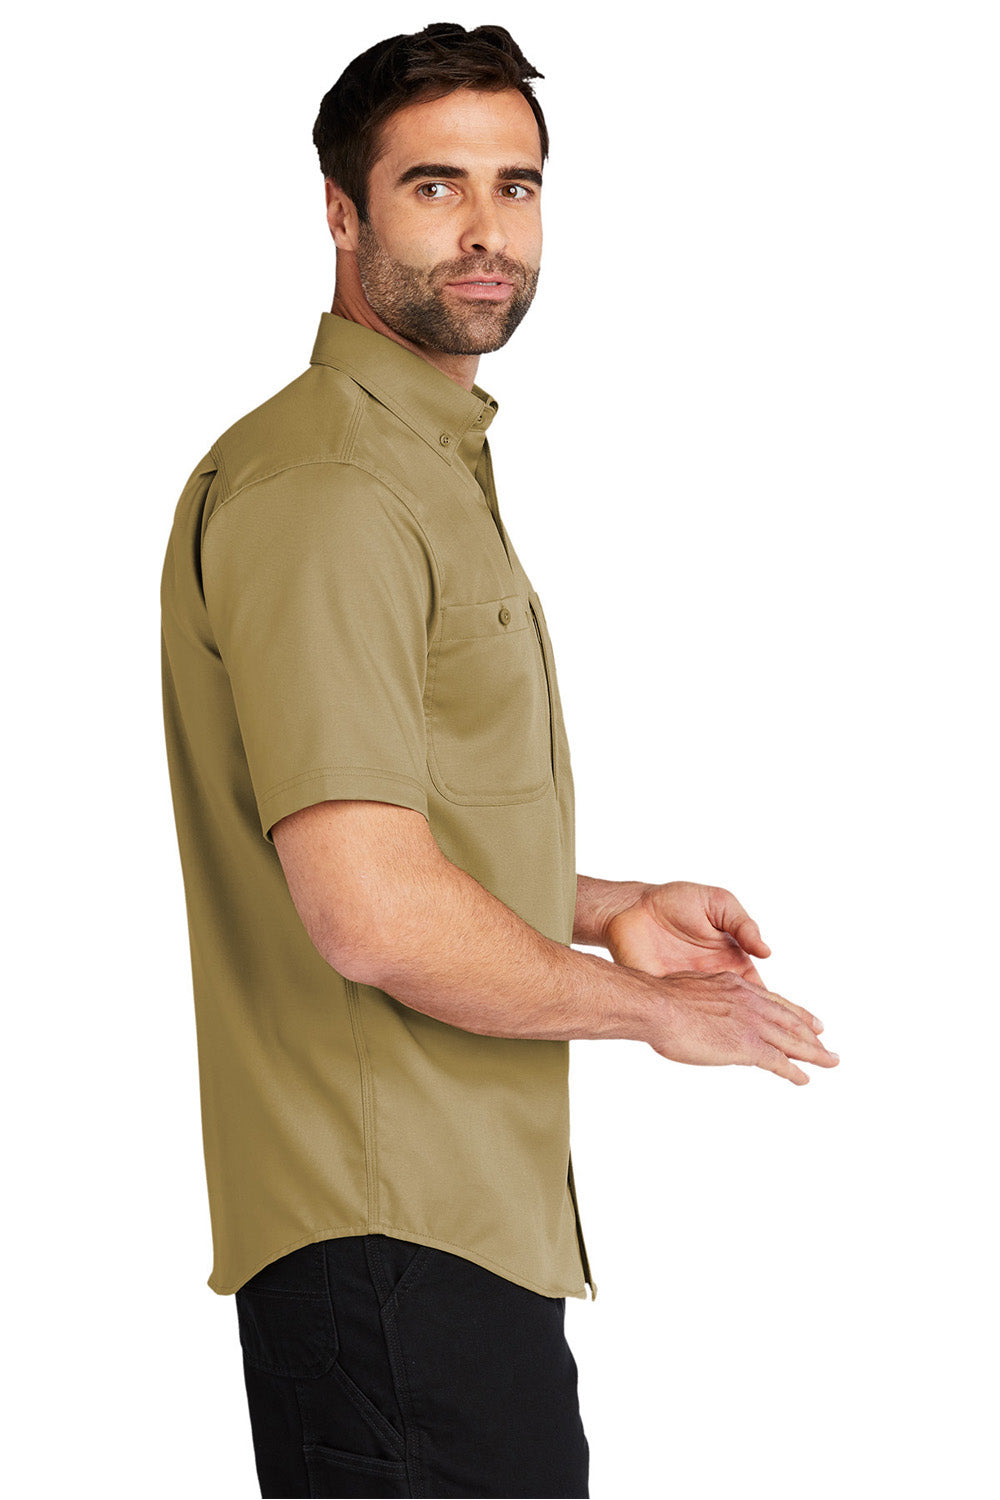 Carhartt CT102537 Mens Rugged Professional Series Wrinkle Resistant Short Sleeve Button Down Shirt w/ Pocket Dark Khaki Brown Model Side